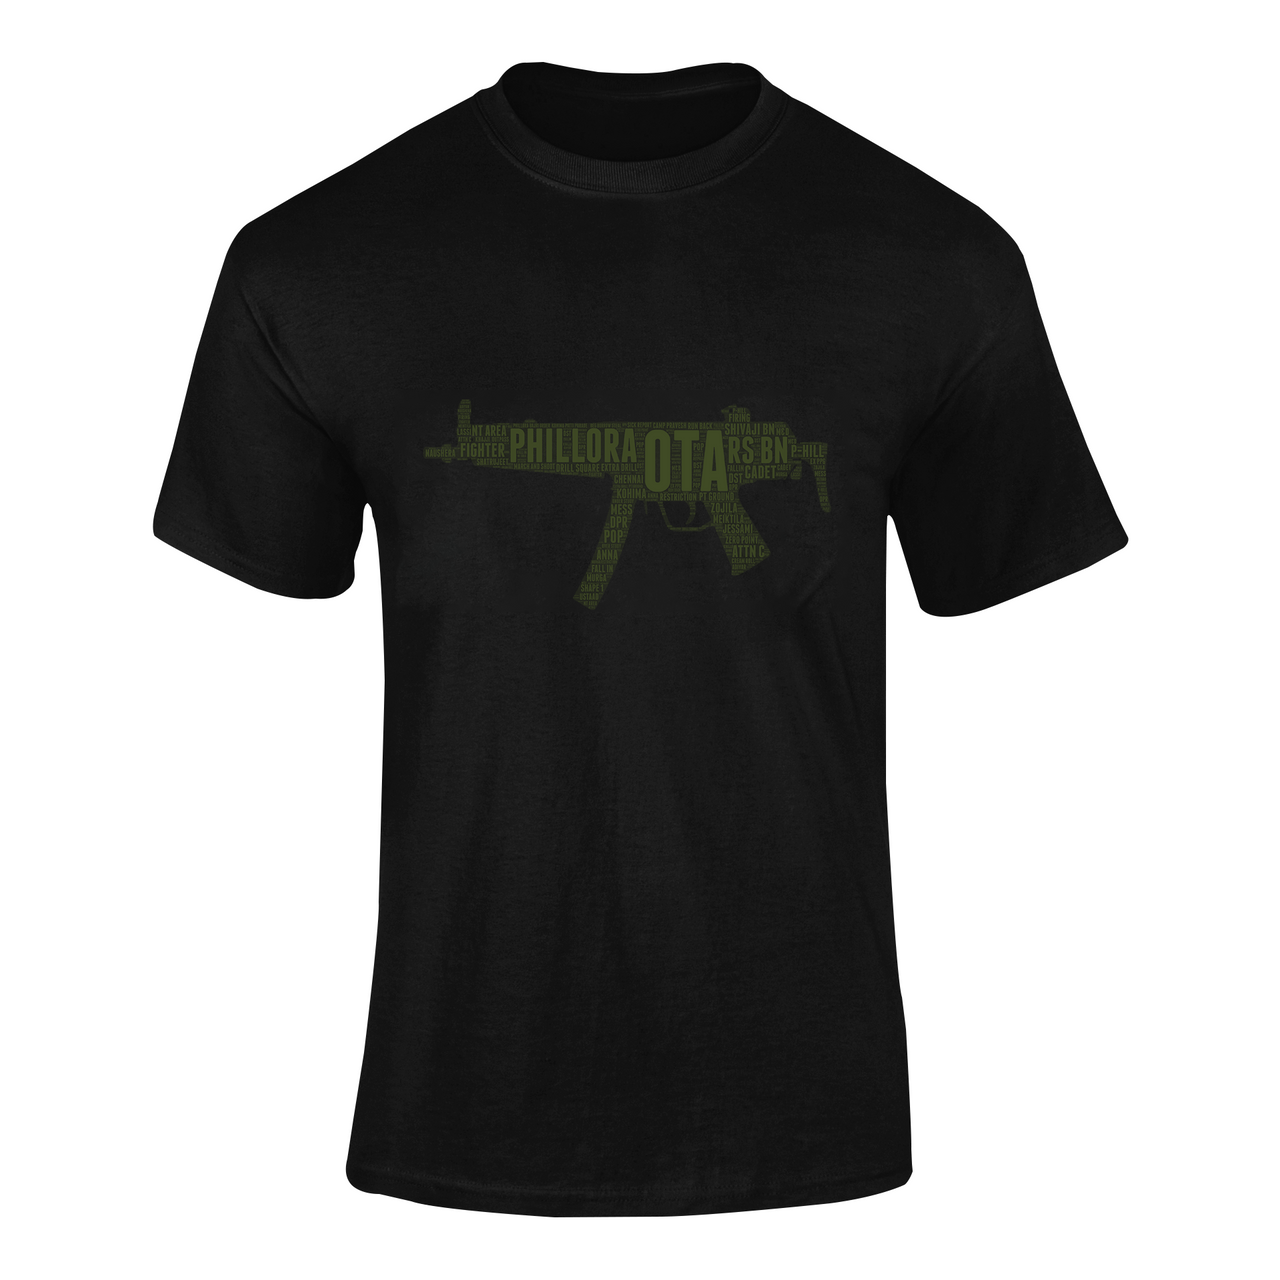 OTA T-shirt - Word Cloud Phillora - MP5 (Men)